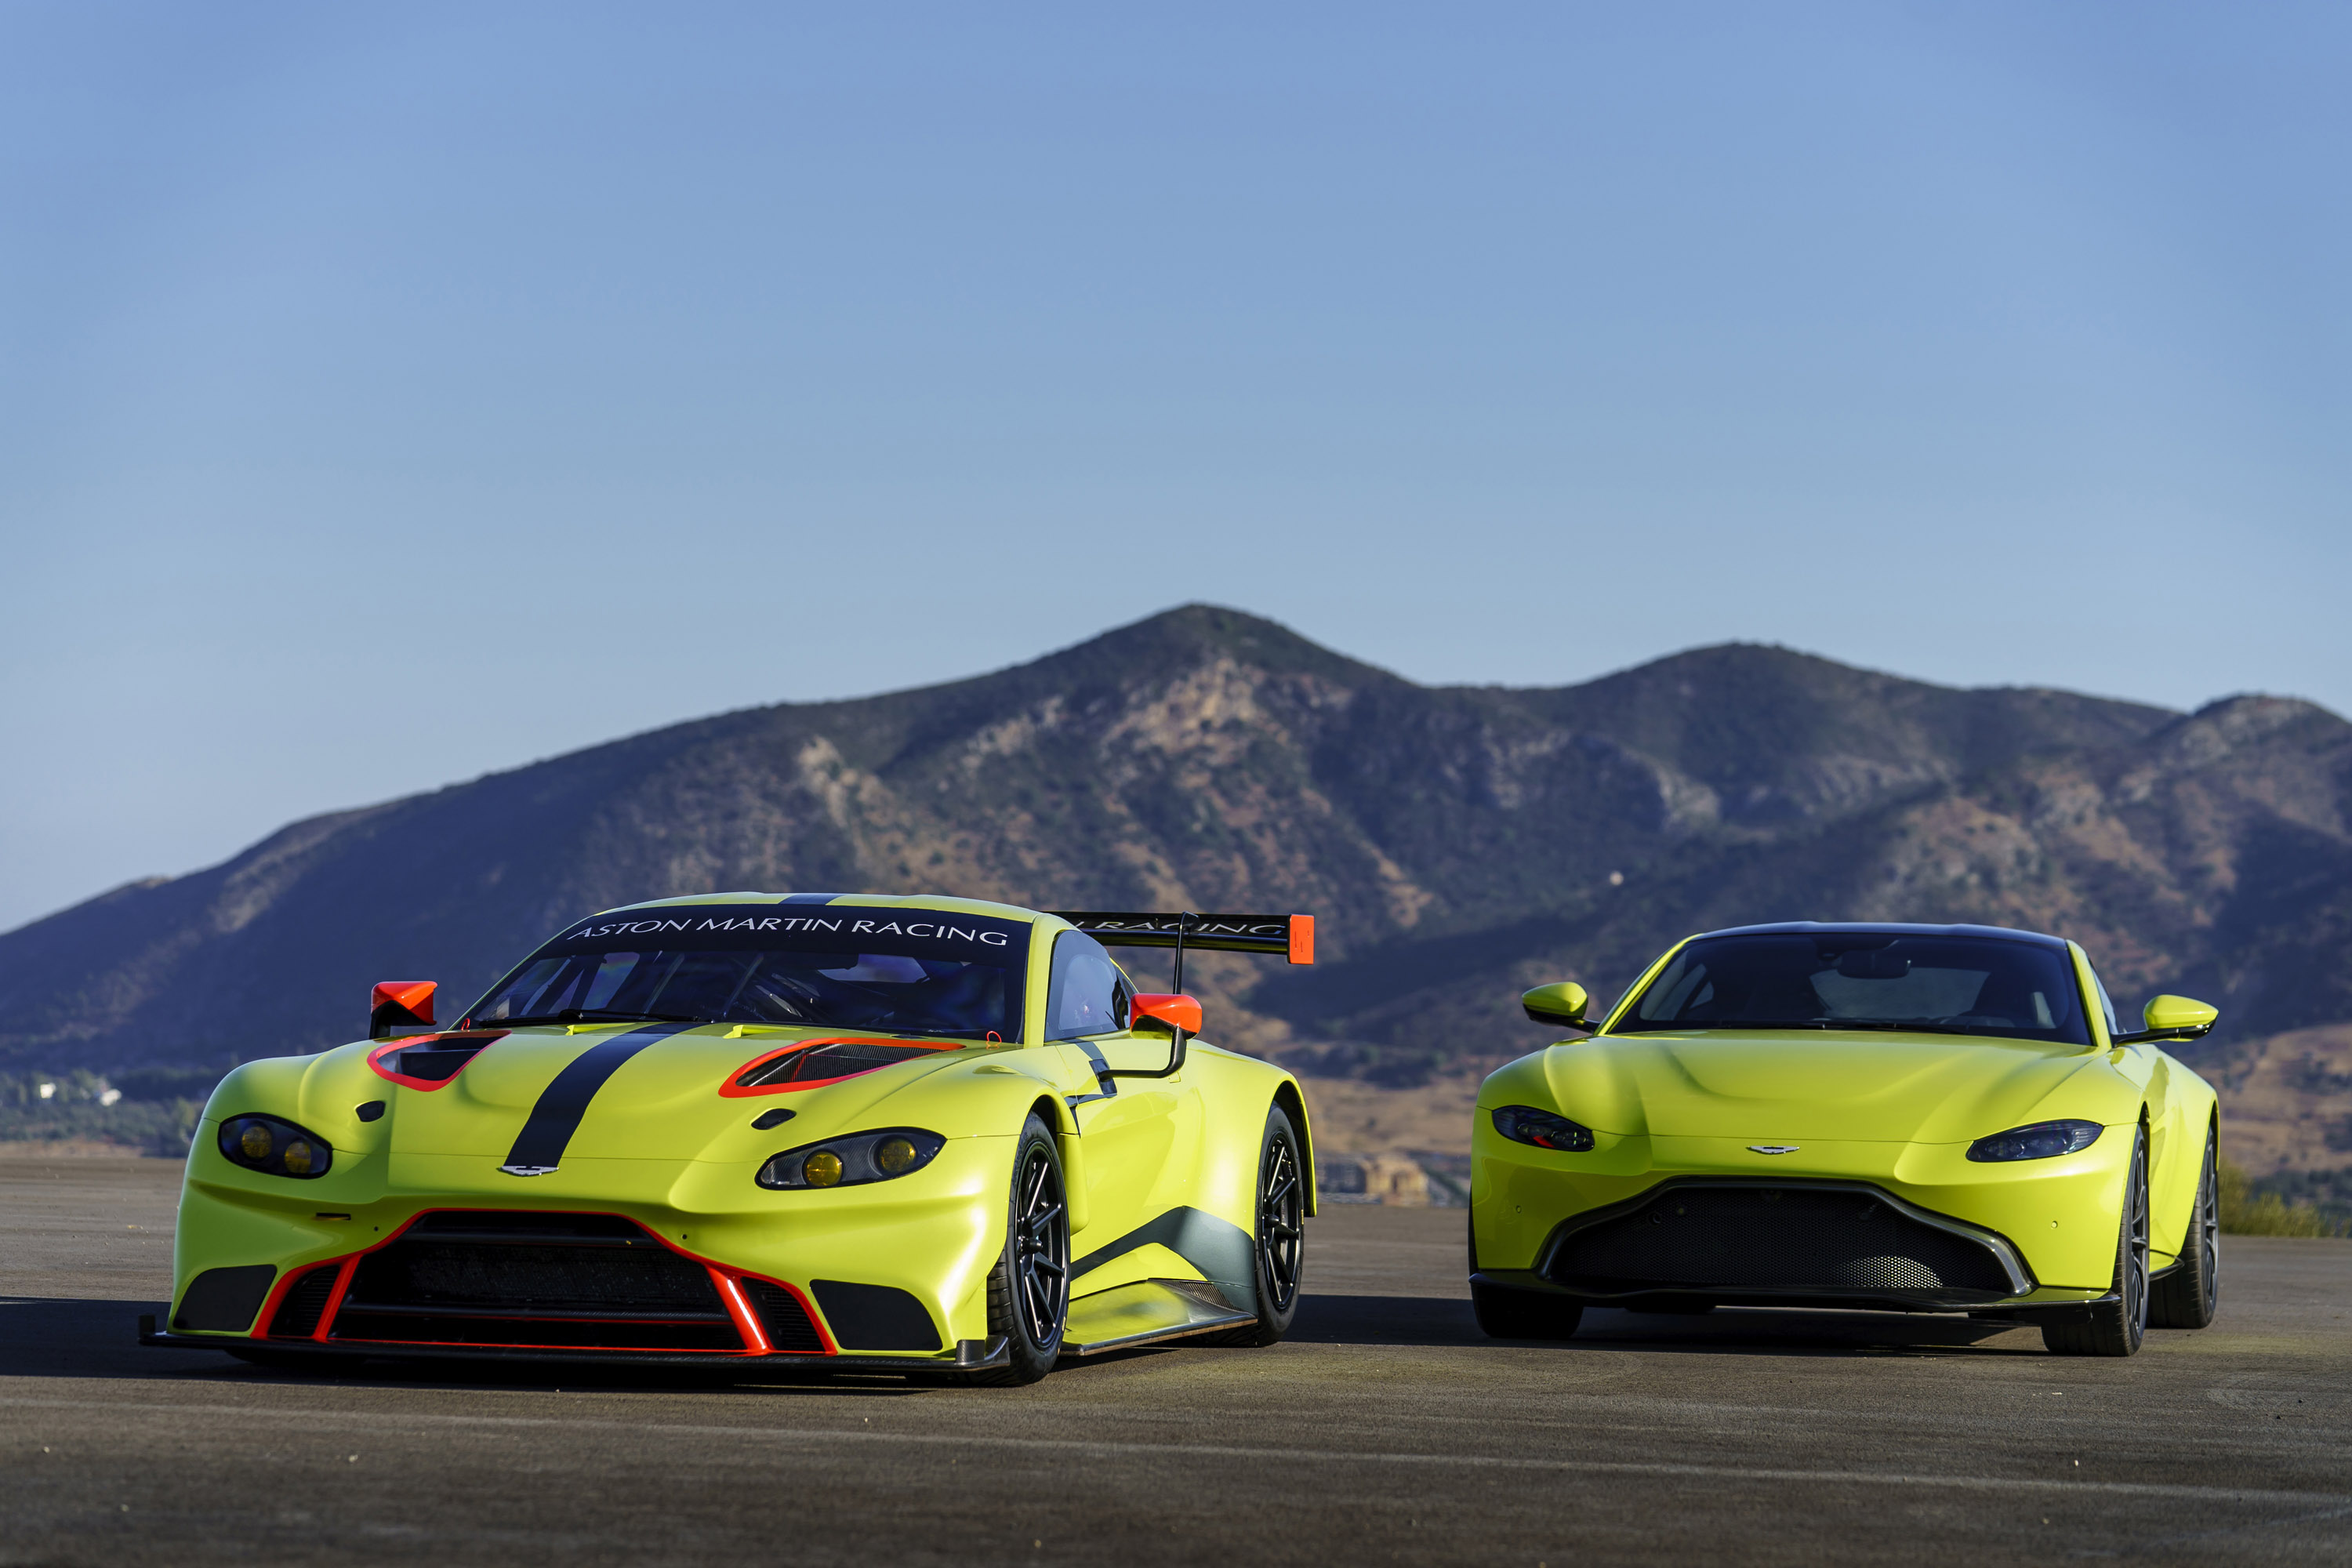 Aston Martin vehicles at Geneva Motor Show